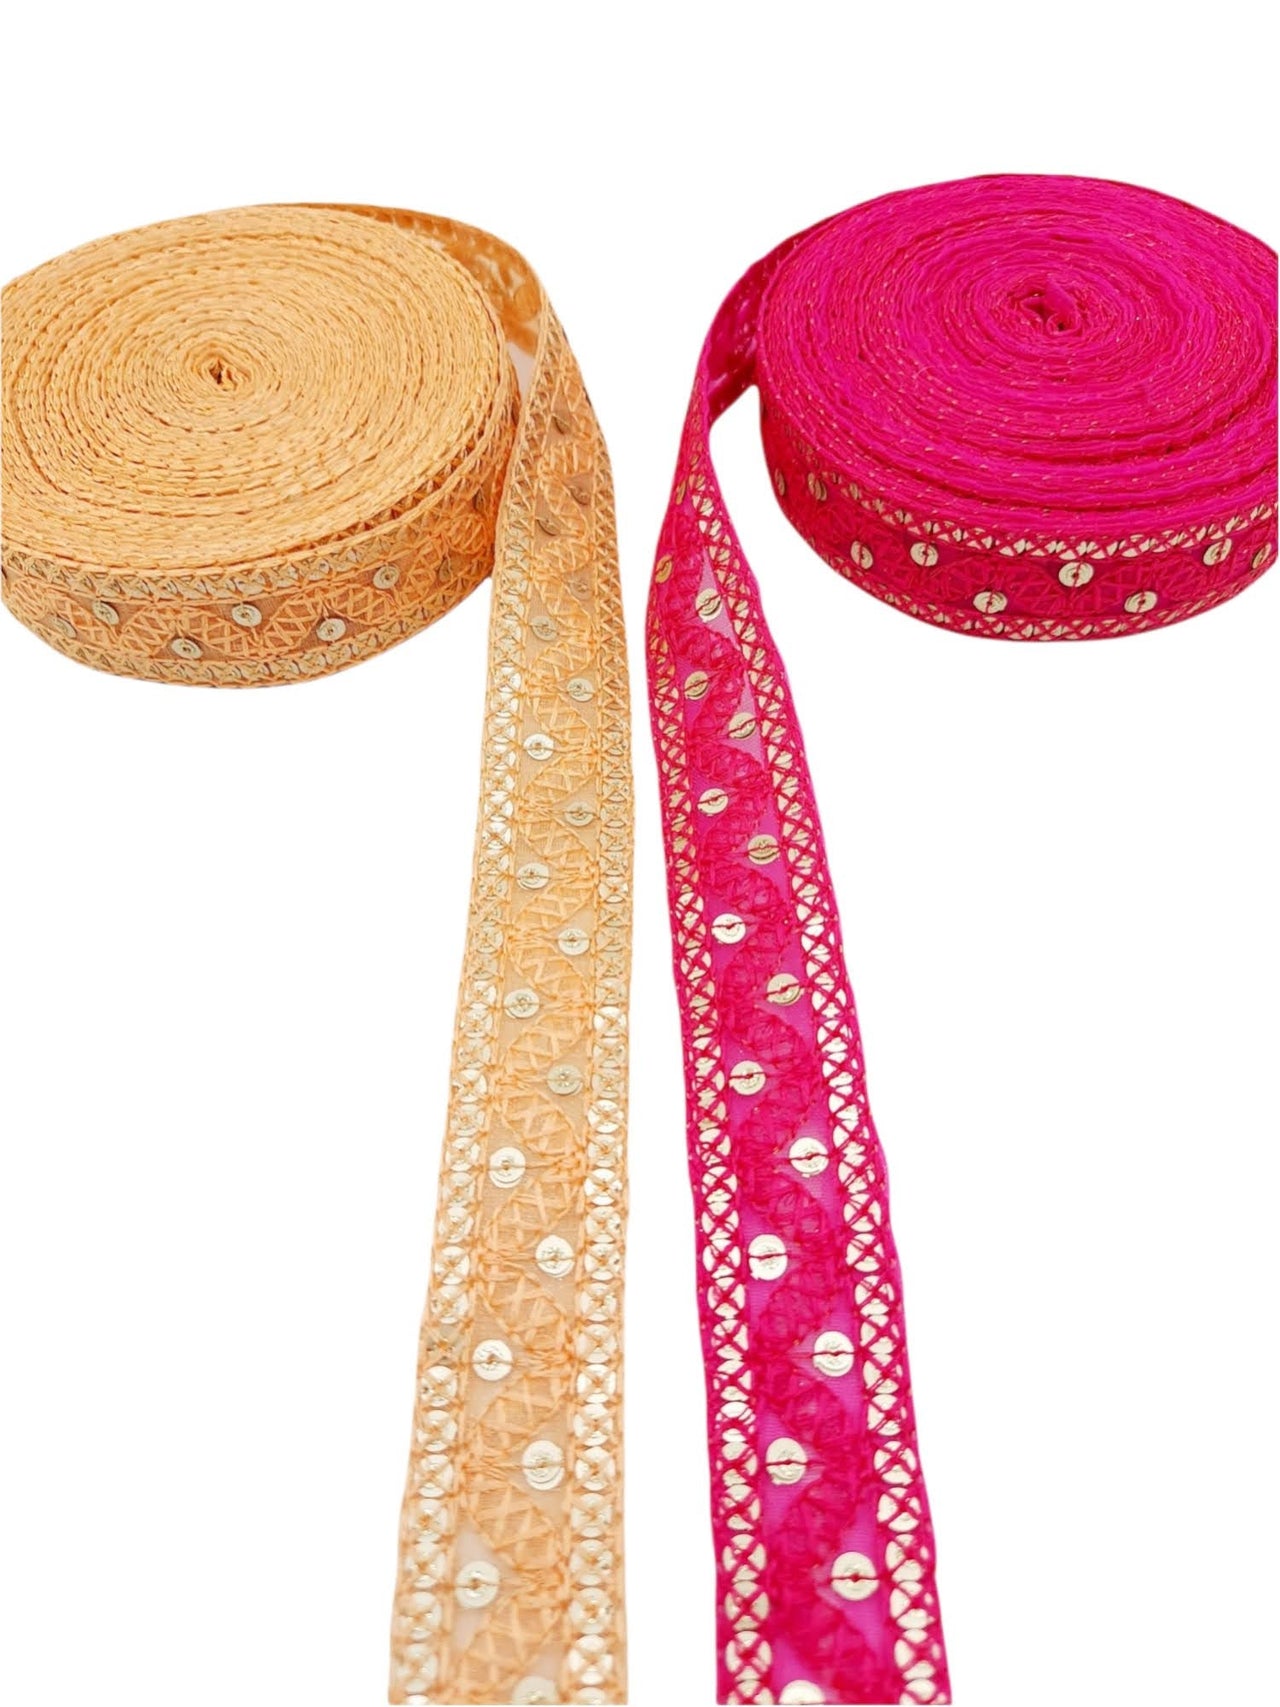 Embroidered Lace Trim Sequins Trim 3 Yards Decorative Sari Border Costume Ribbon Crafting Sewing Tape